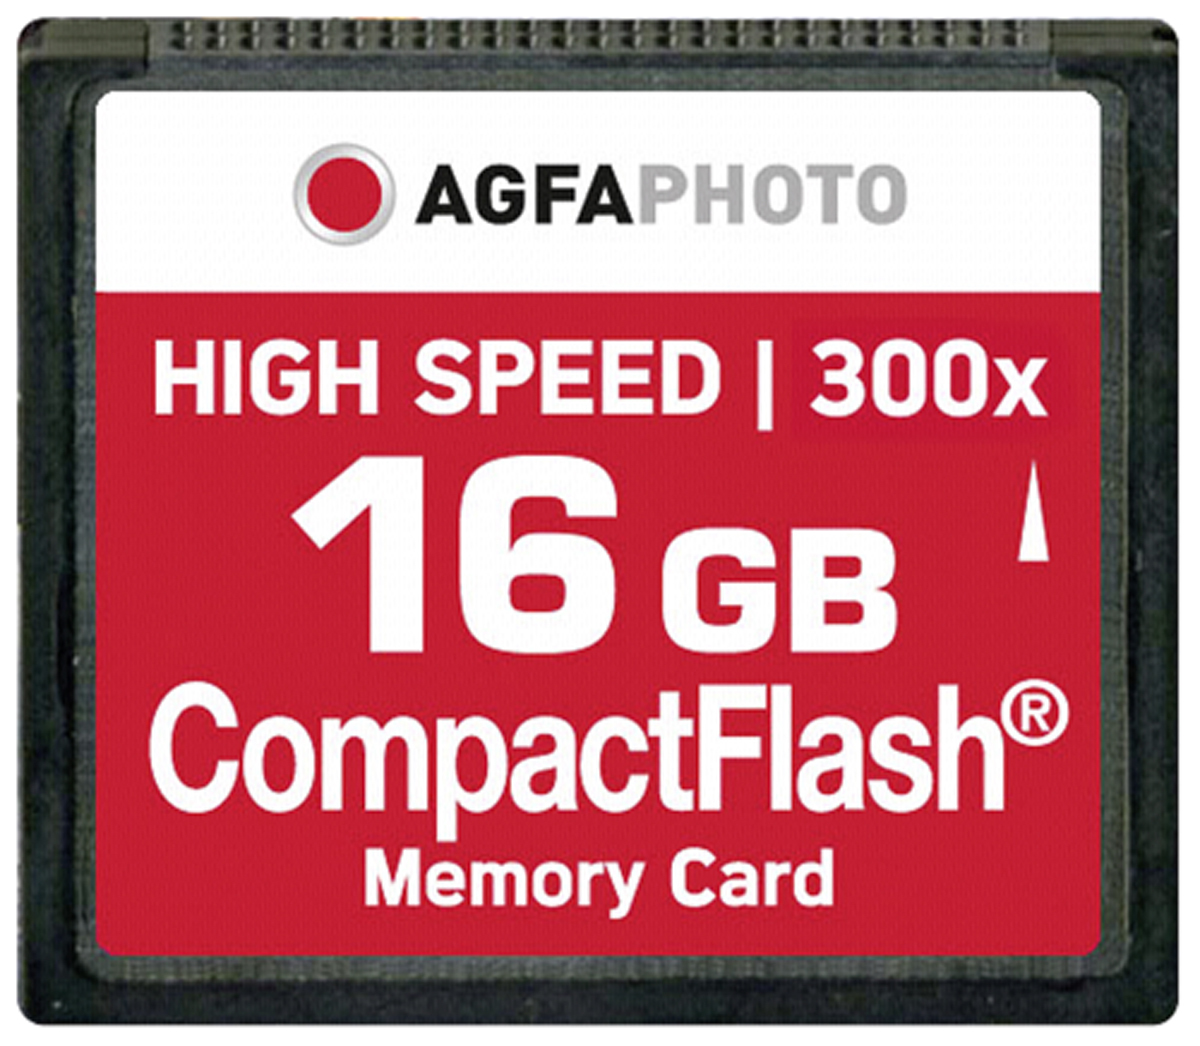 AgfaPhoto 16 GB CompactFlash